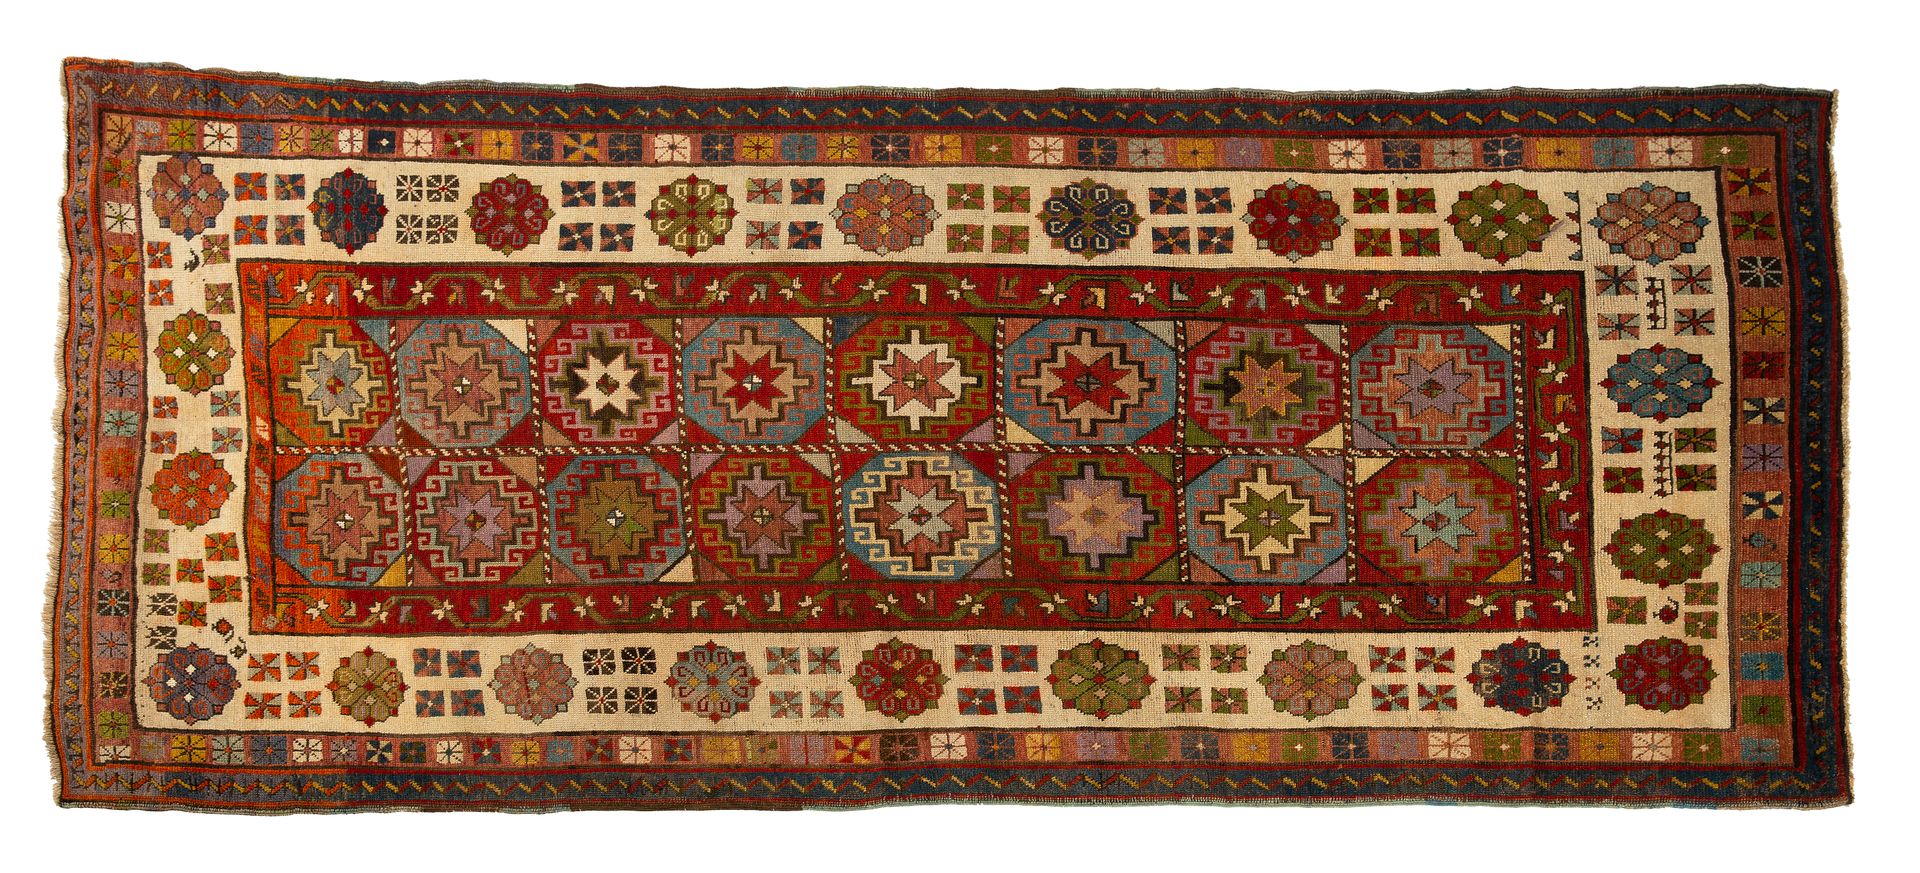 Null Tapis TALISH (Caucase), fin du XIXe siècle

Dimensions : 255 x 110cm.

Cara&hellip;